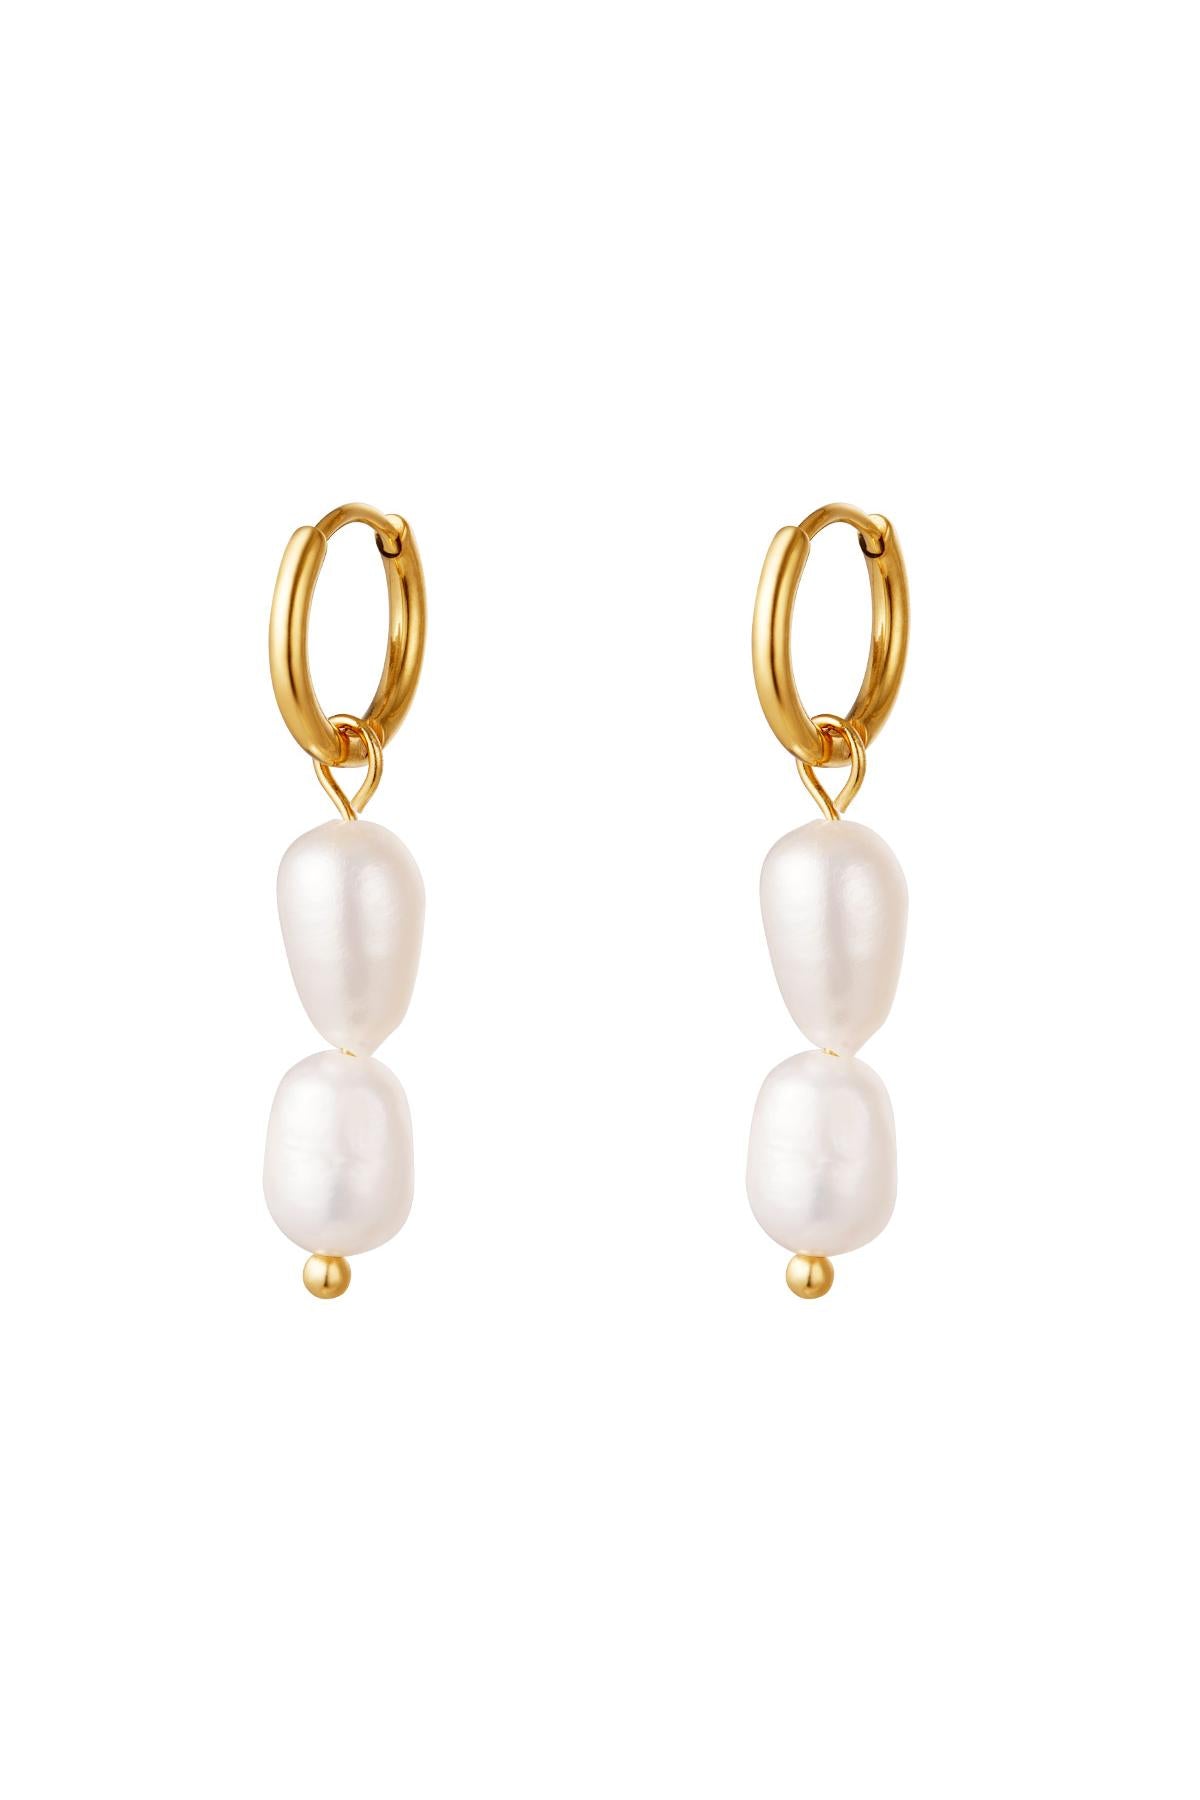 "Lily" Pearl Earrings